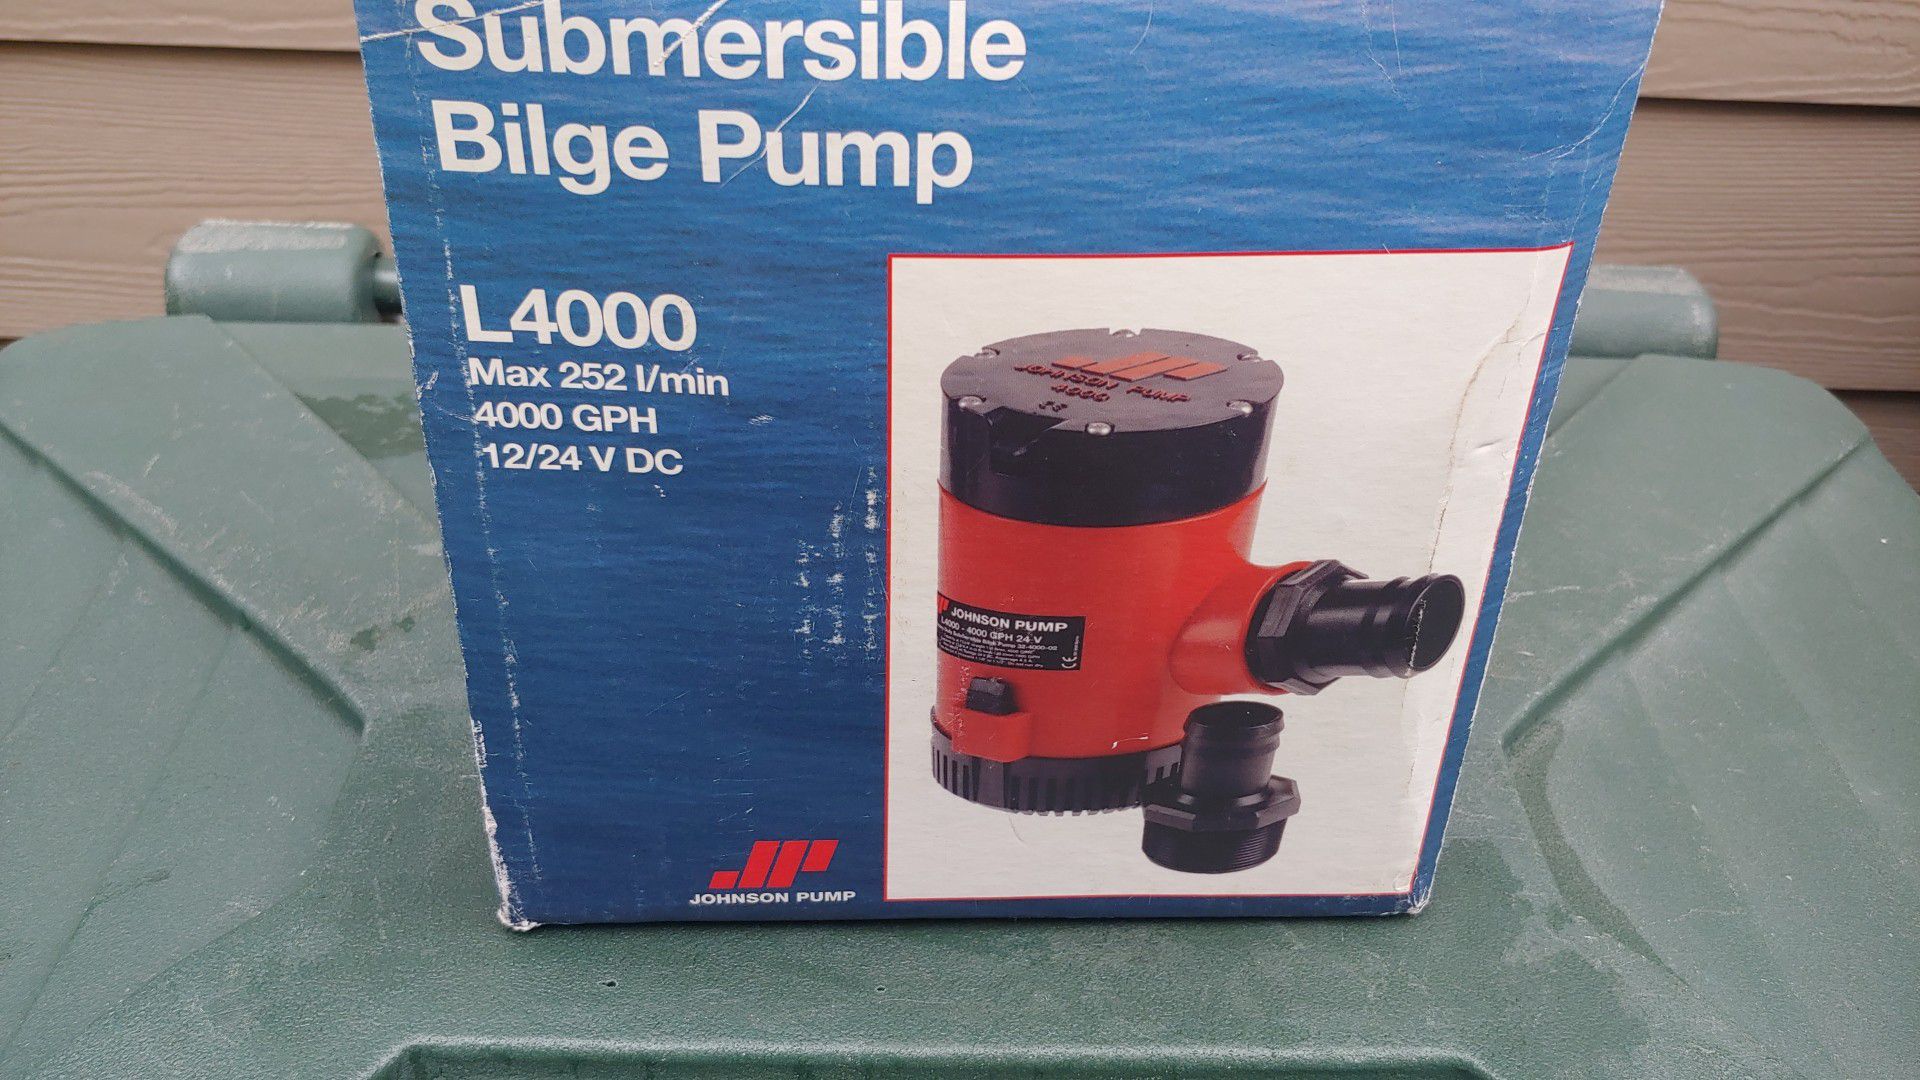 New Johnson submersible bilge pump model 40004